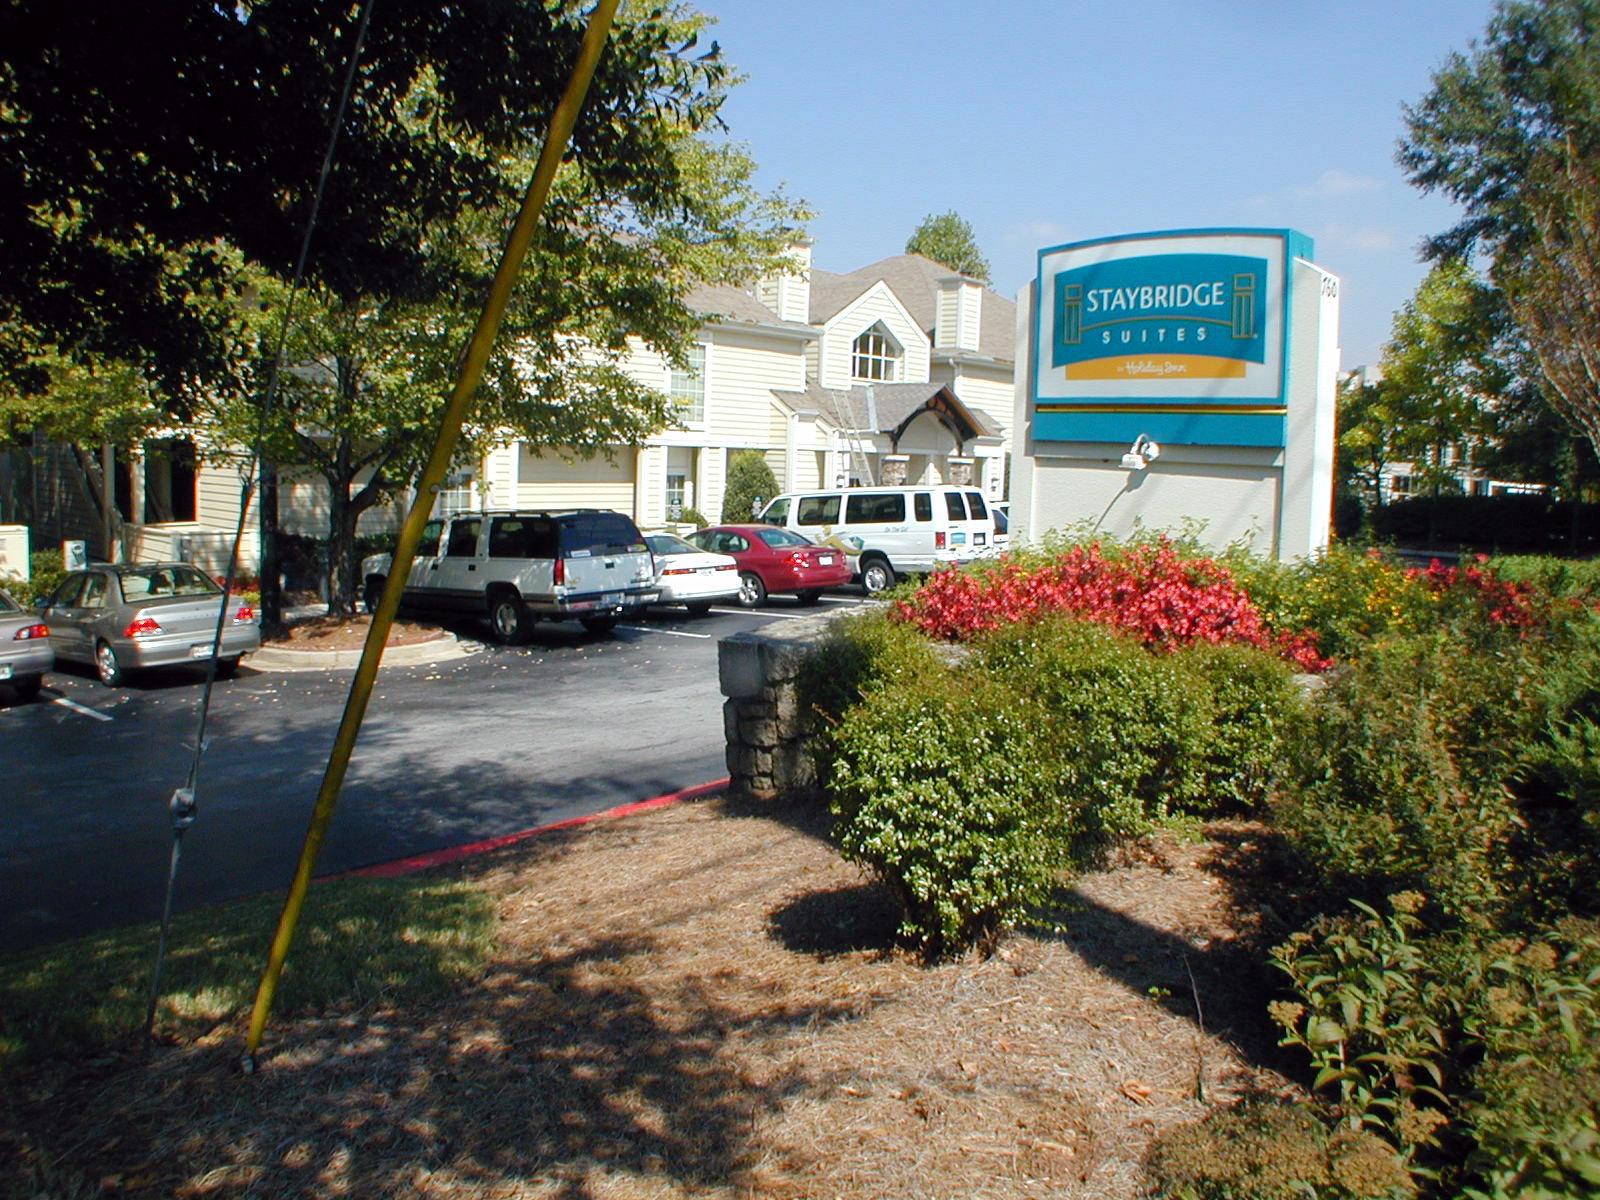 Photo of Staybridge Suites Atlanta Perimeter Center West, Atlanta, GA